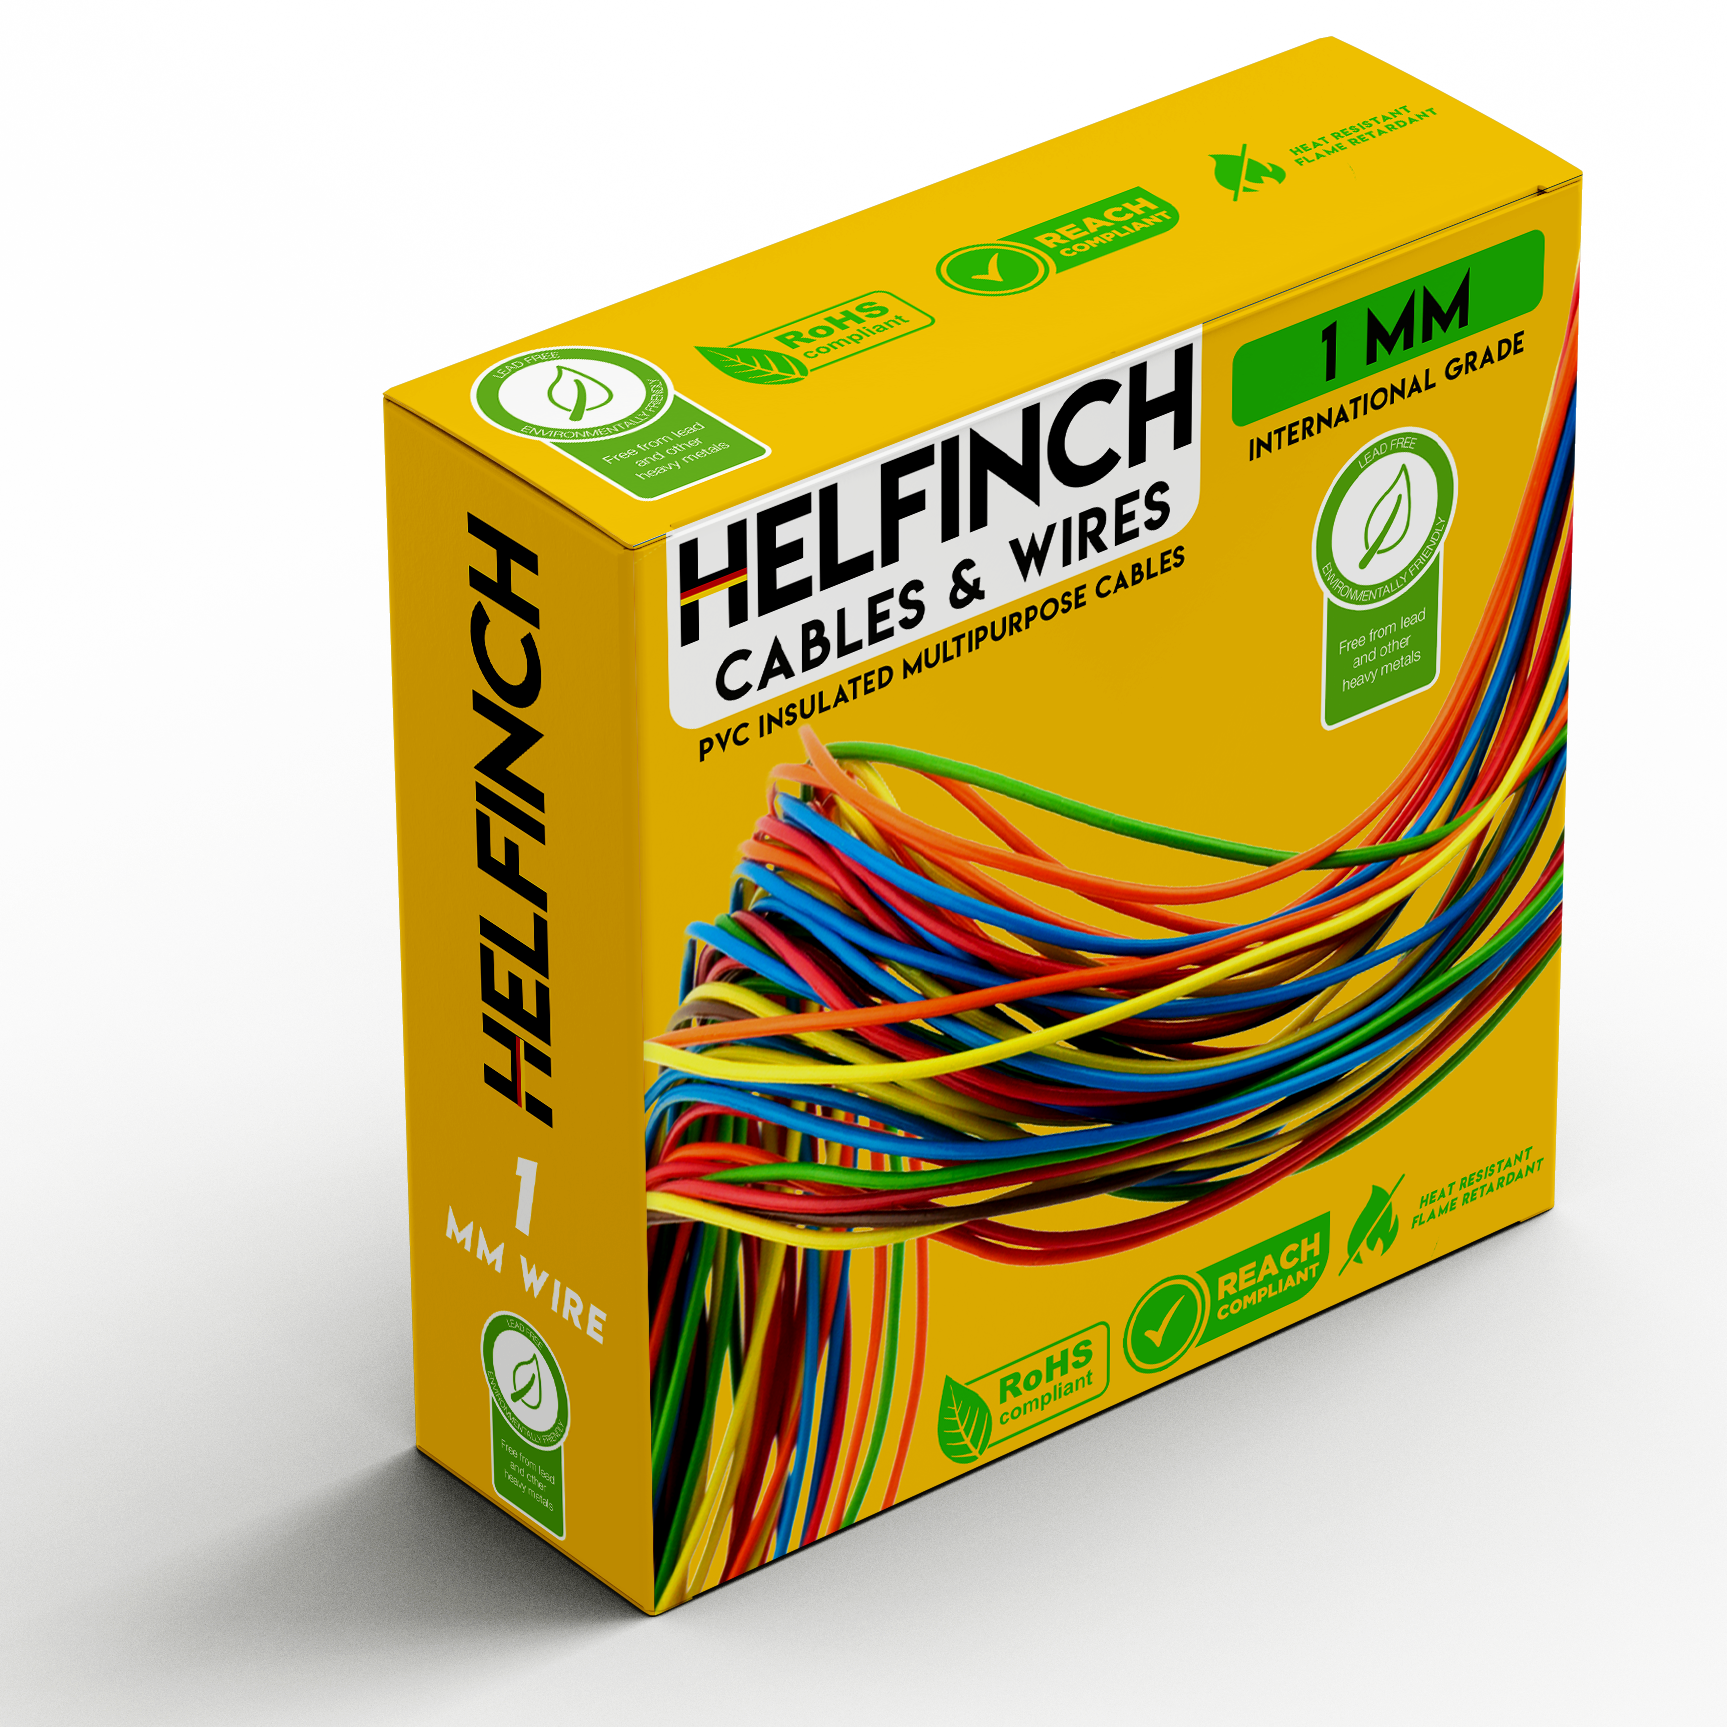 Helfinch 1MM Premium Lead Free Wires HRFR HIS ZHFR ROHS REACH Compliant